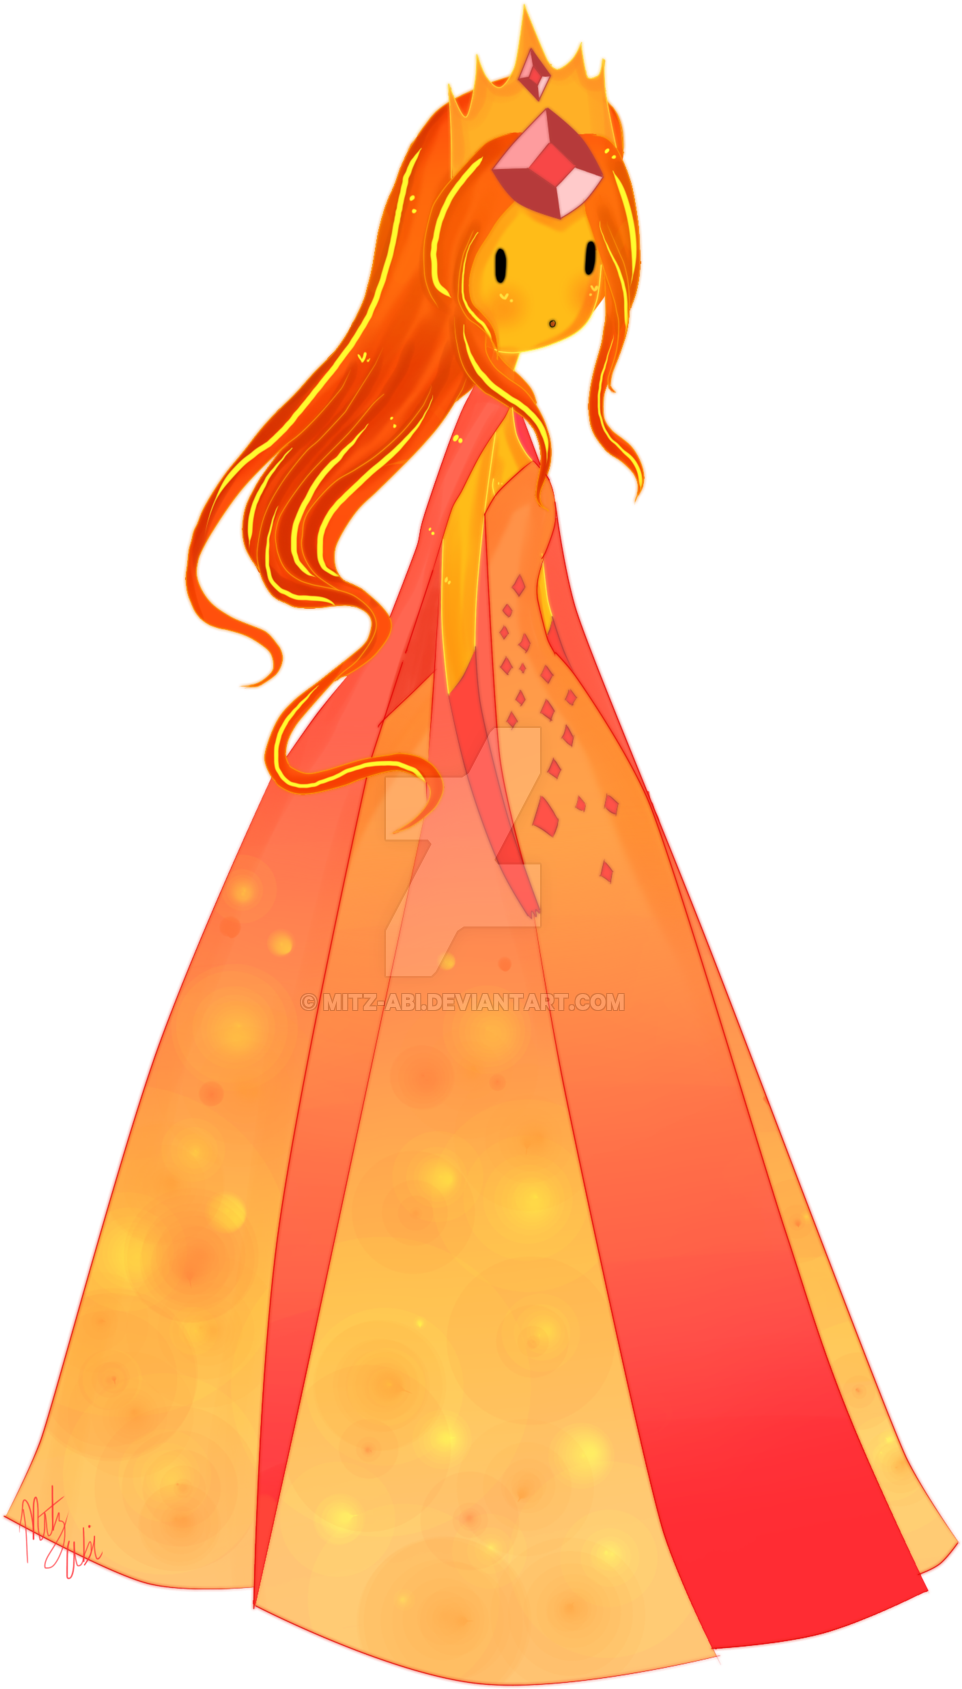 Adventure Time Flame Princess PNG Transparent Image